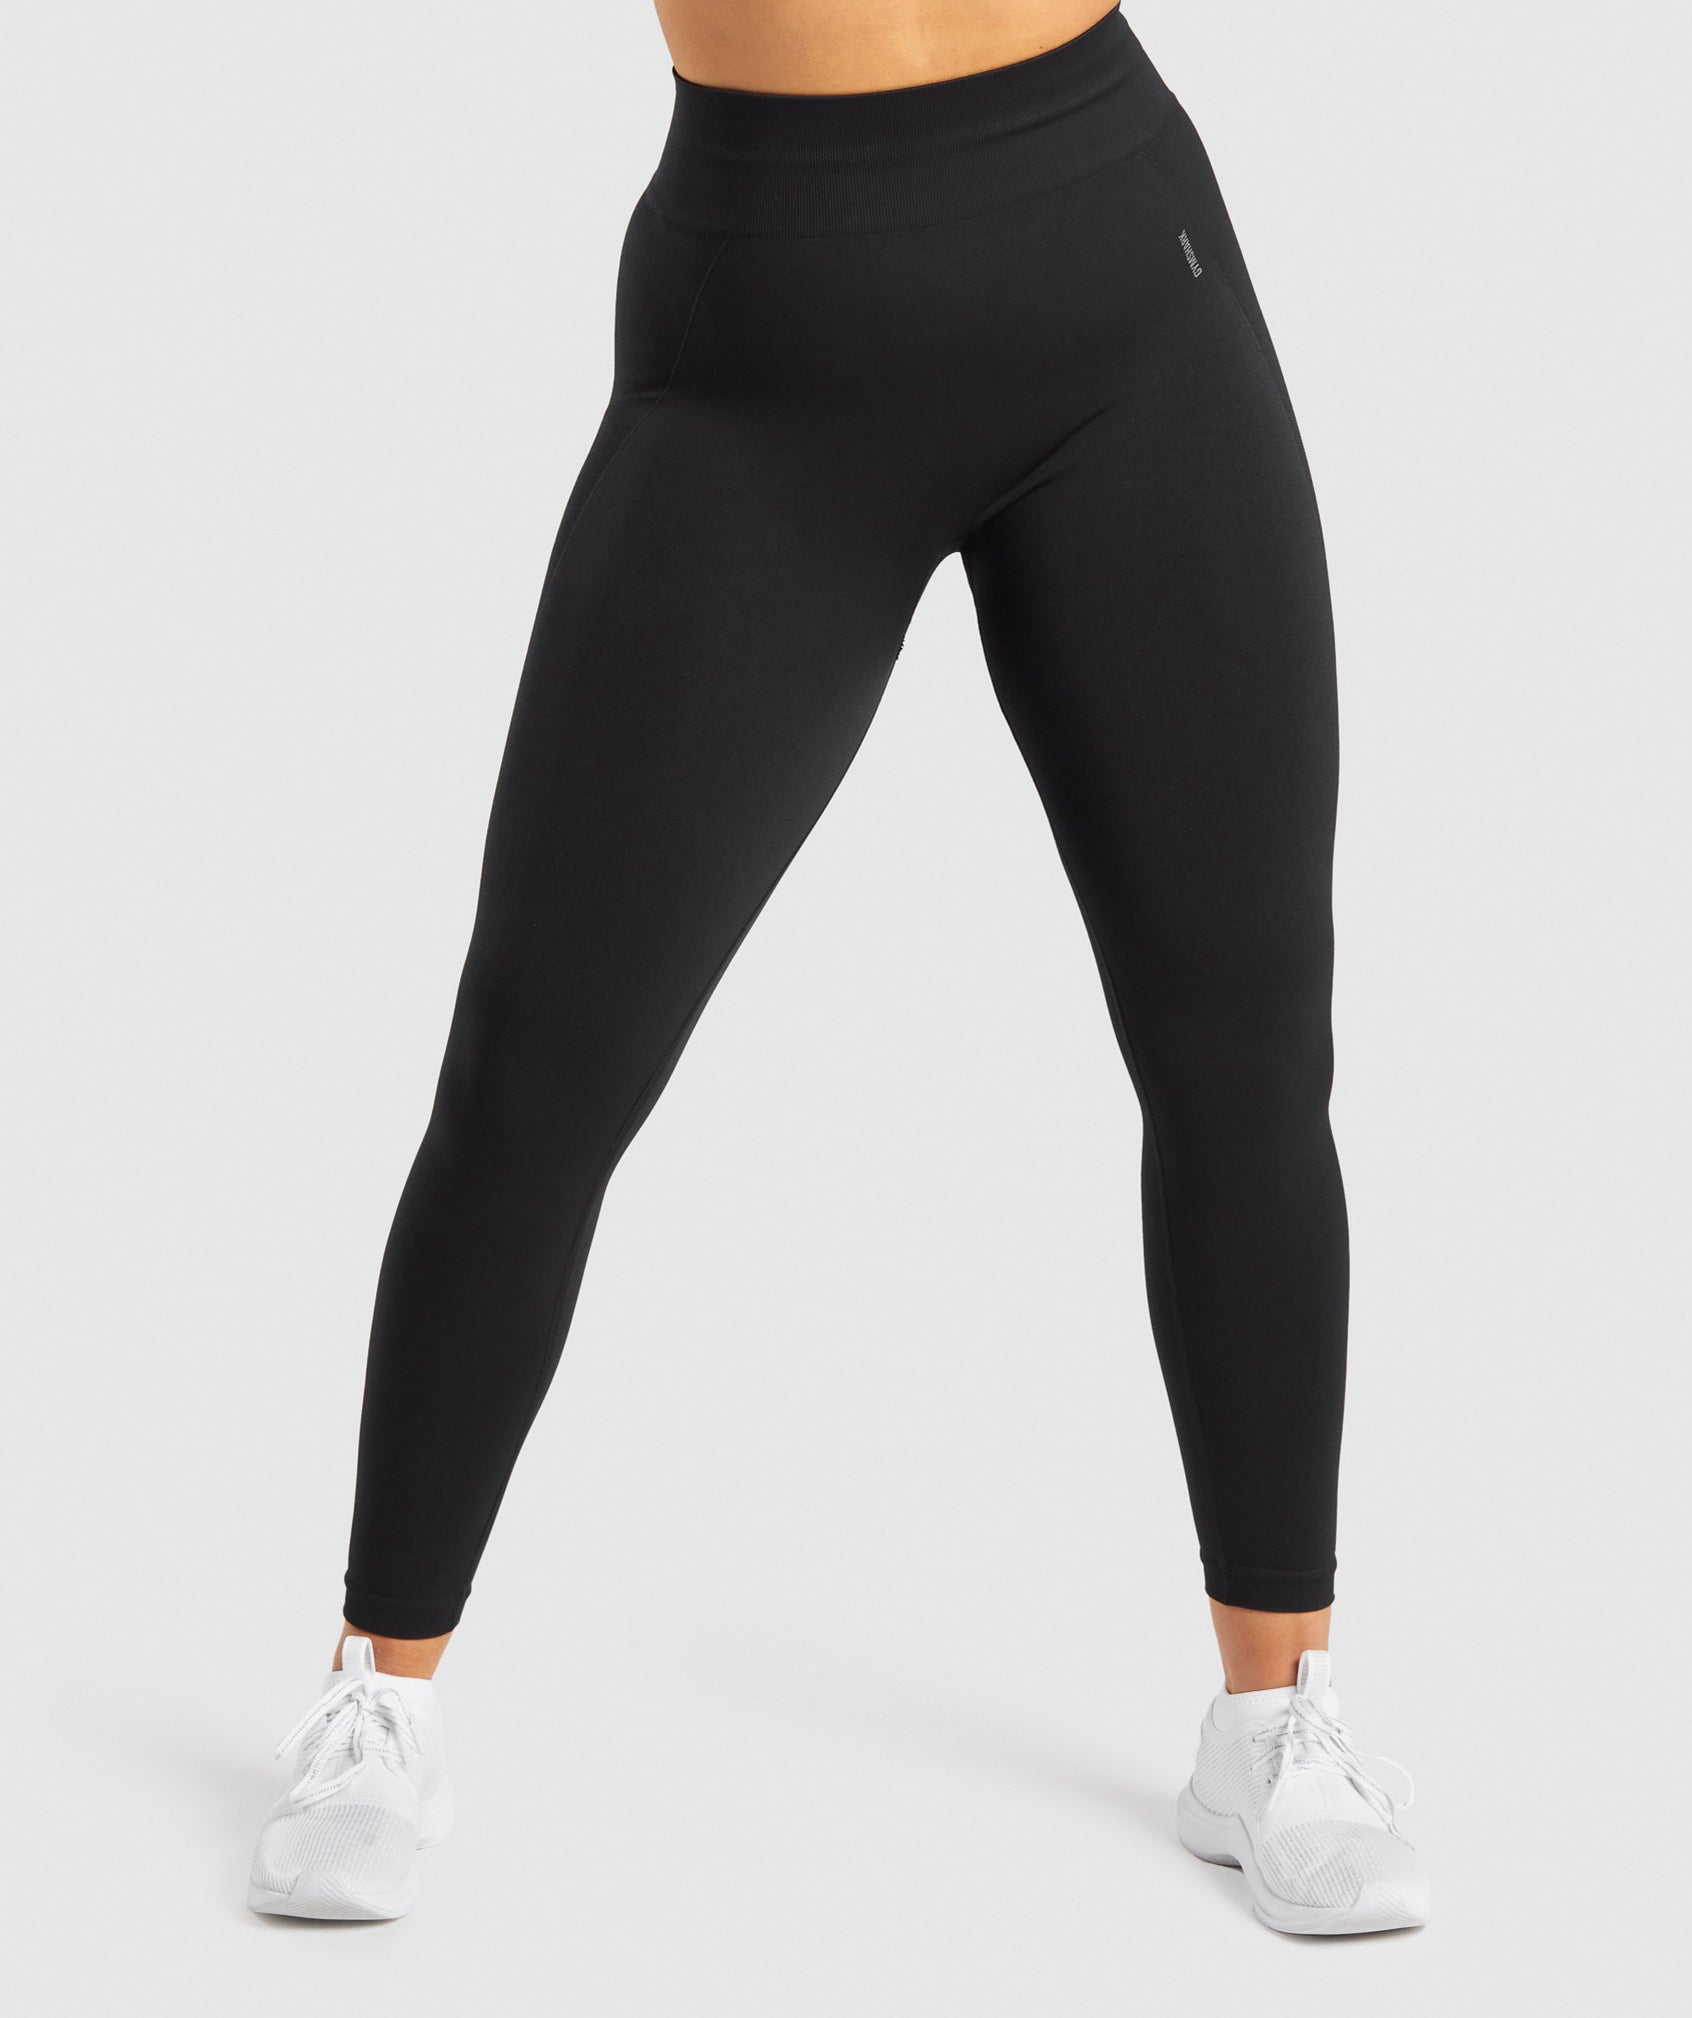 Gymshark, Pants & Jumpsuits, Gymshark Flex High Waisted Leggings Charcoal  Marl